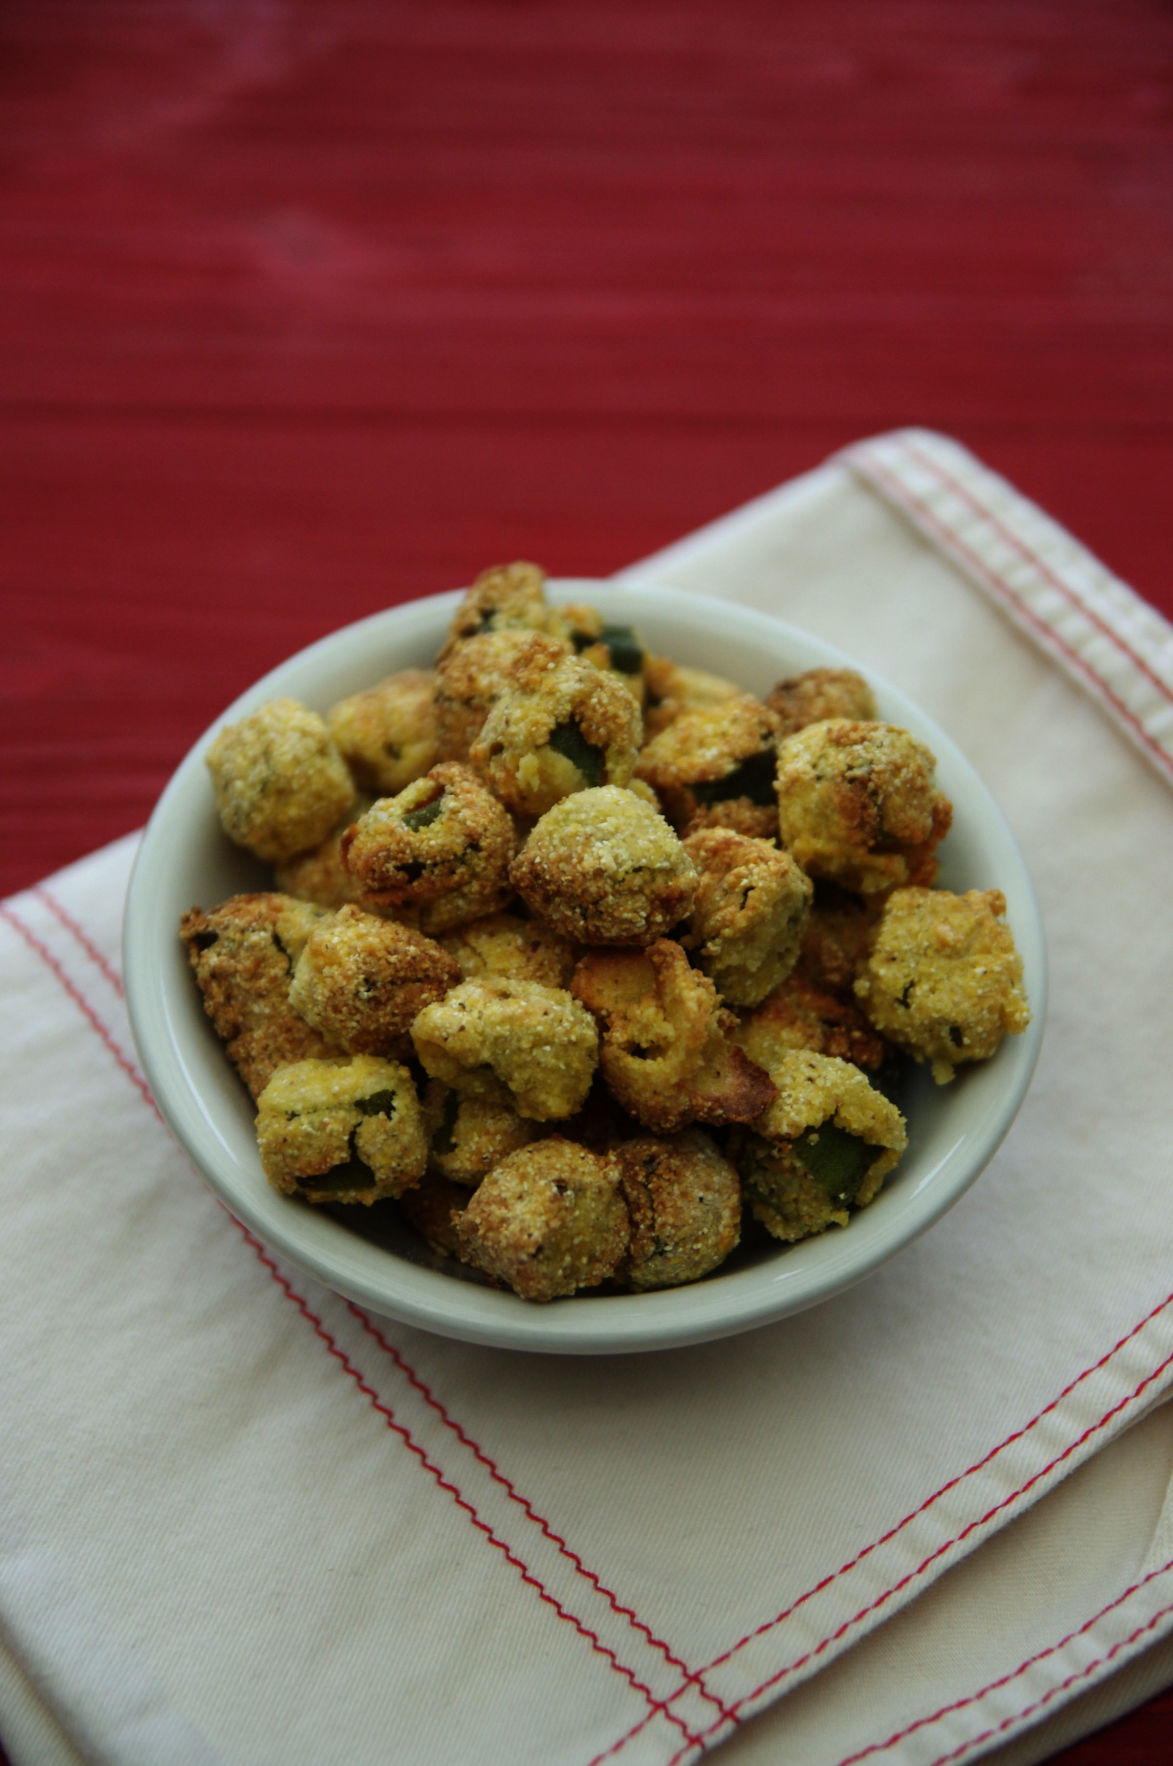 I Eat La.: Recipes for Spicy Stuffed Zucchini, Air Fried Okra, Satsuma ...